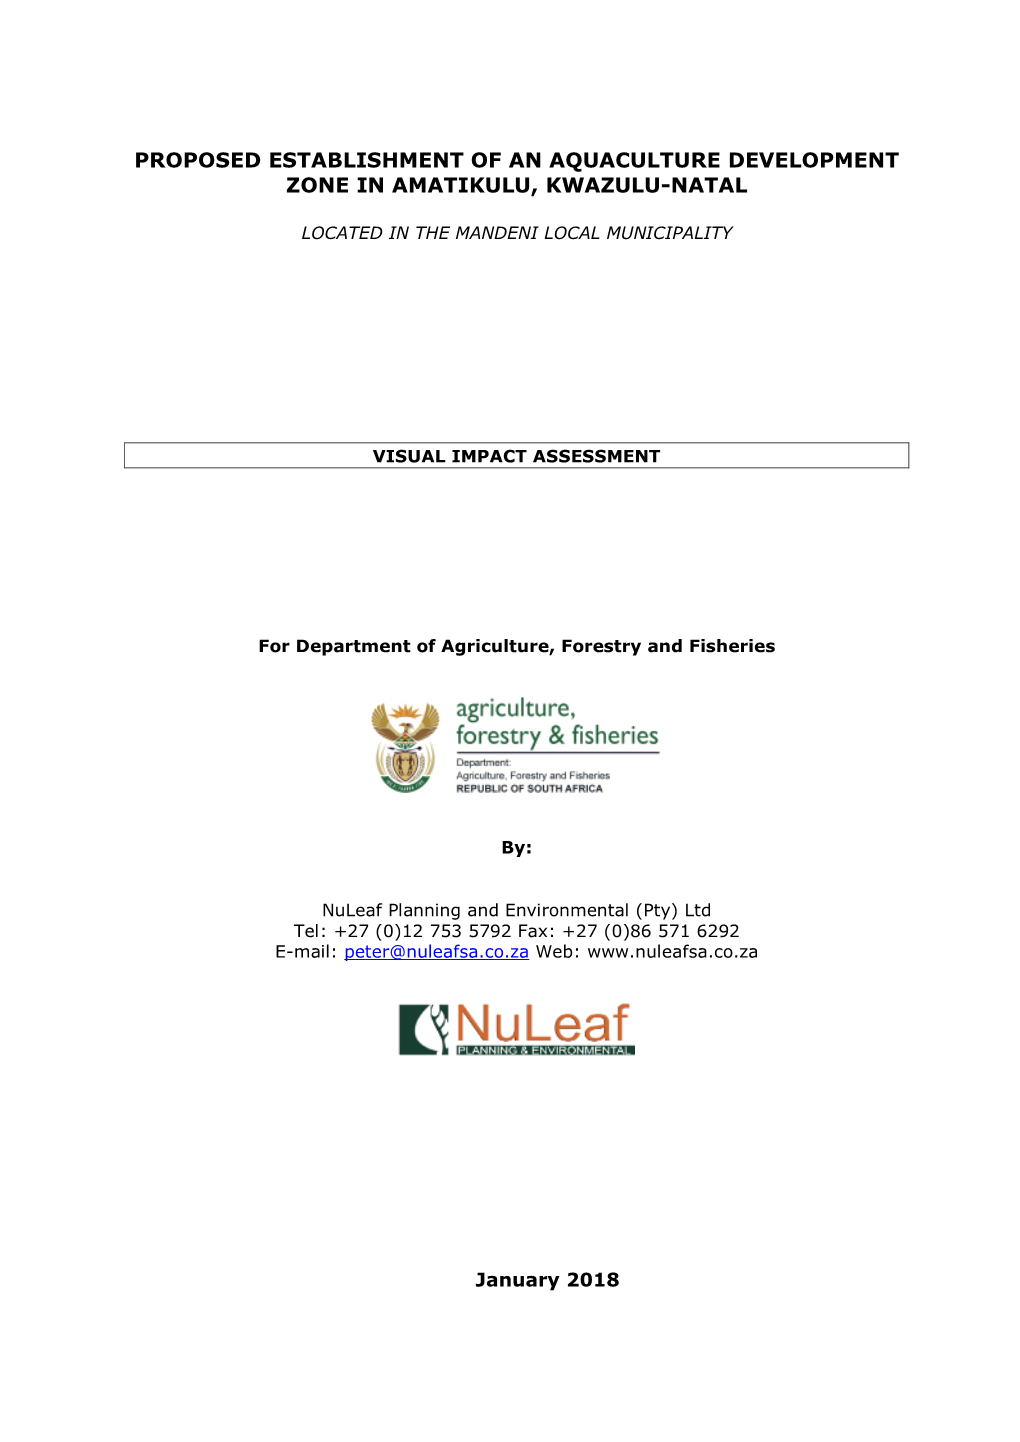 Proposed Establishment of an Aquaculture Development Zone in Amatikulu, Kwazulu-Natal